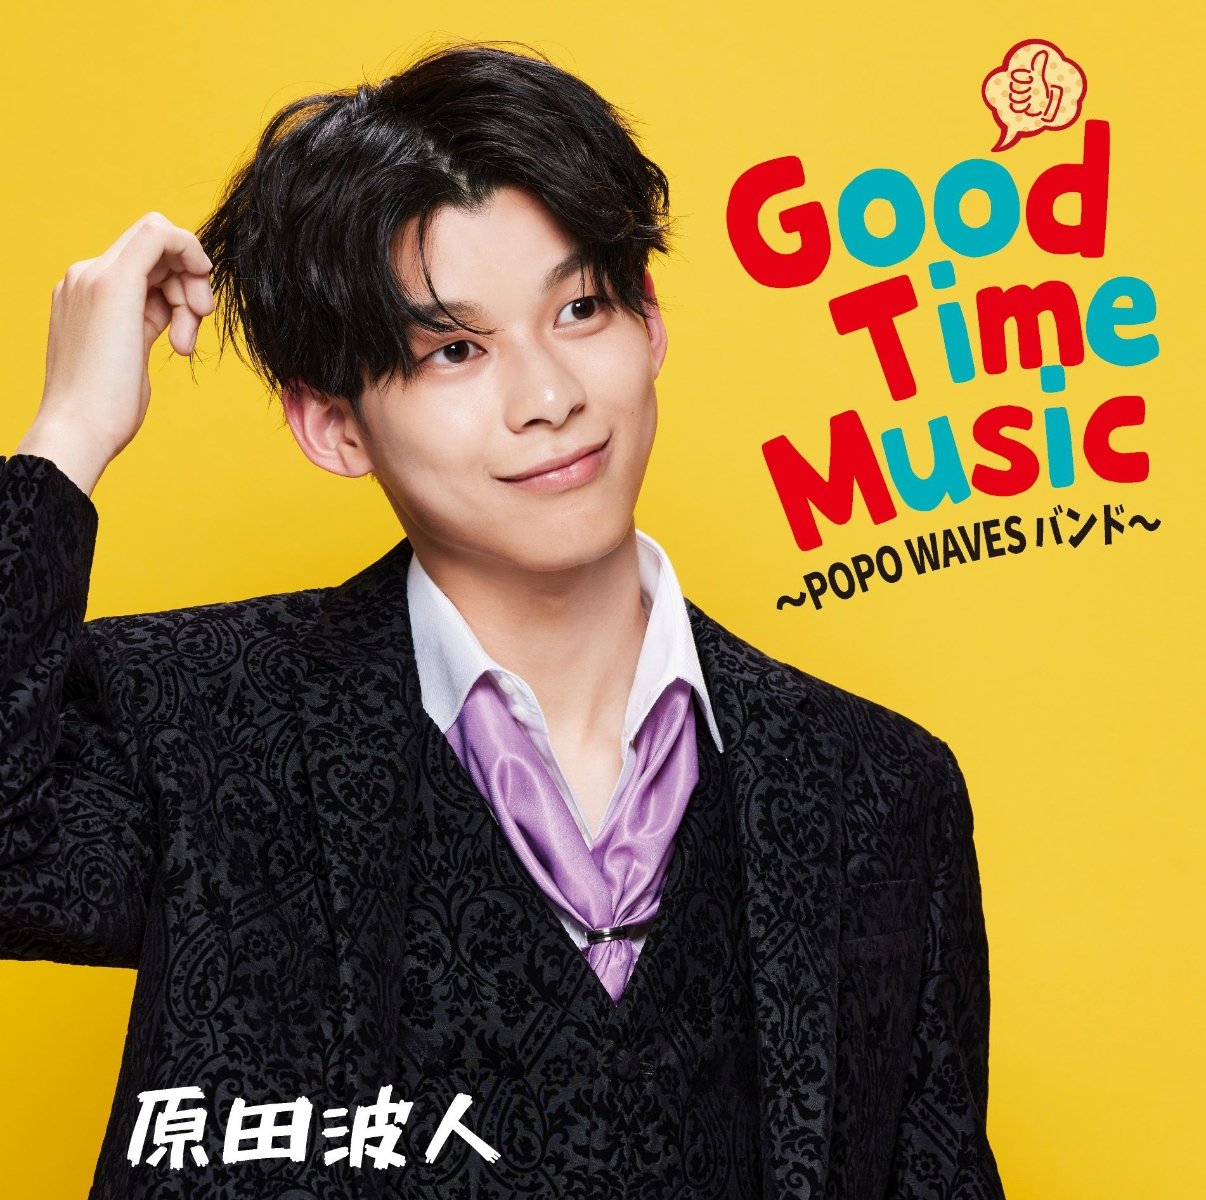 CD Shop - HARADA, NAMITO GOOD TIME MUSIC -POPO WAVES BAND-